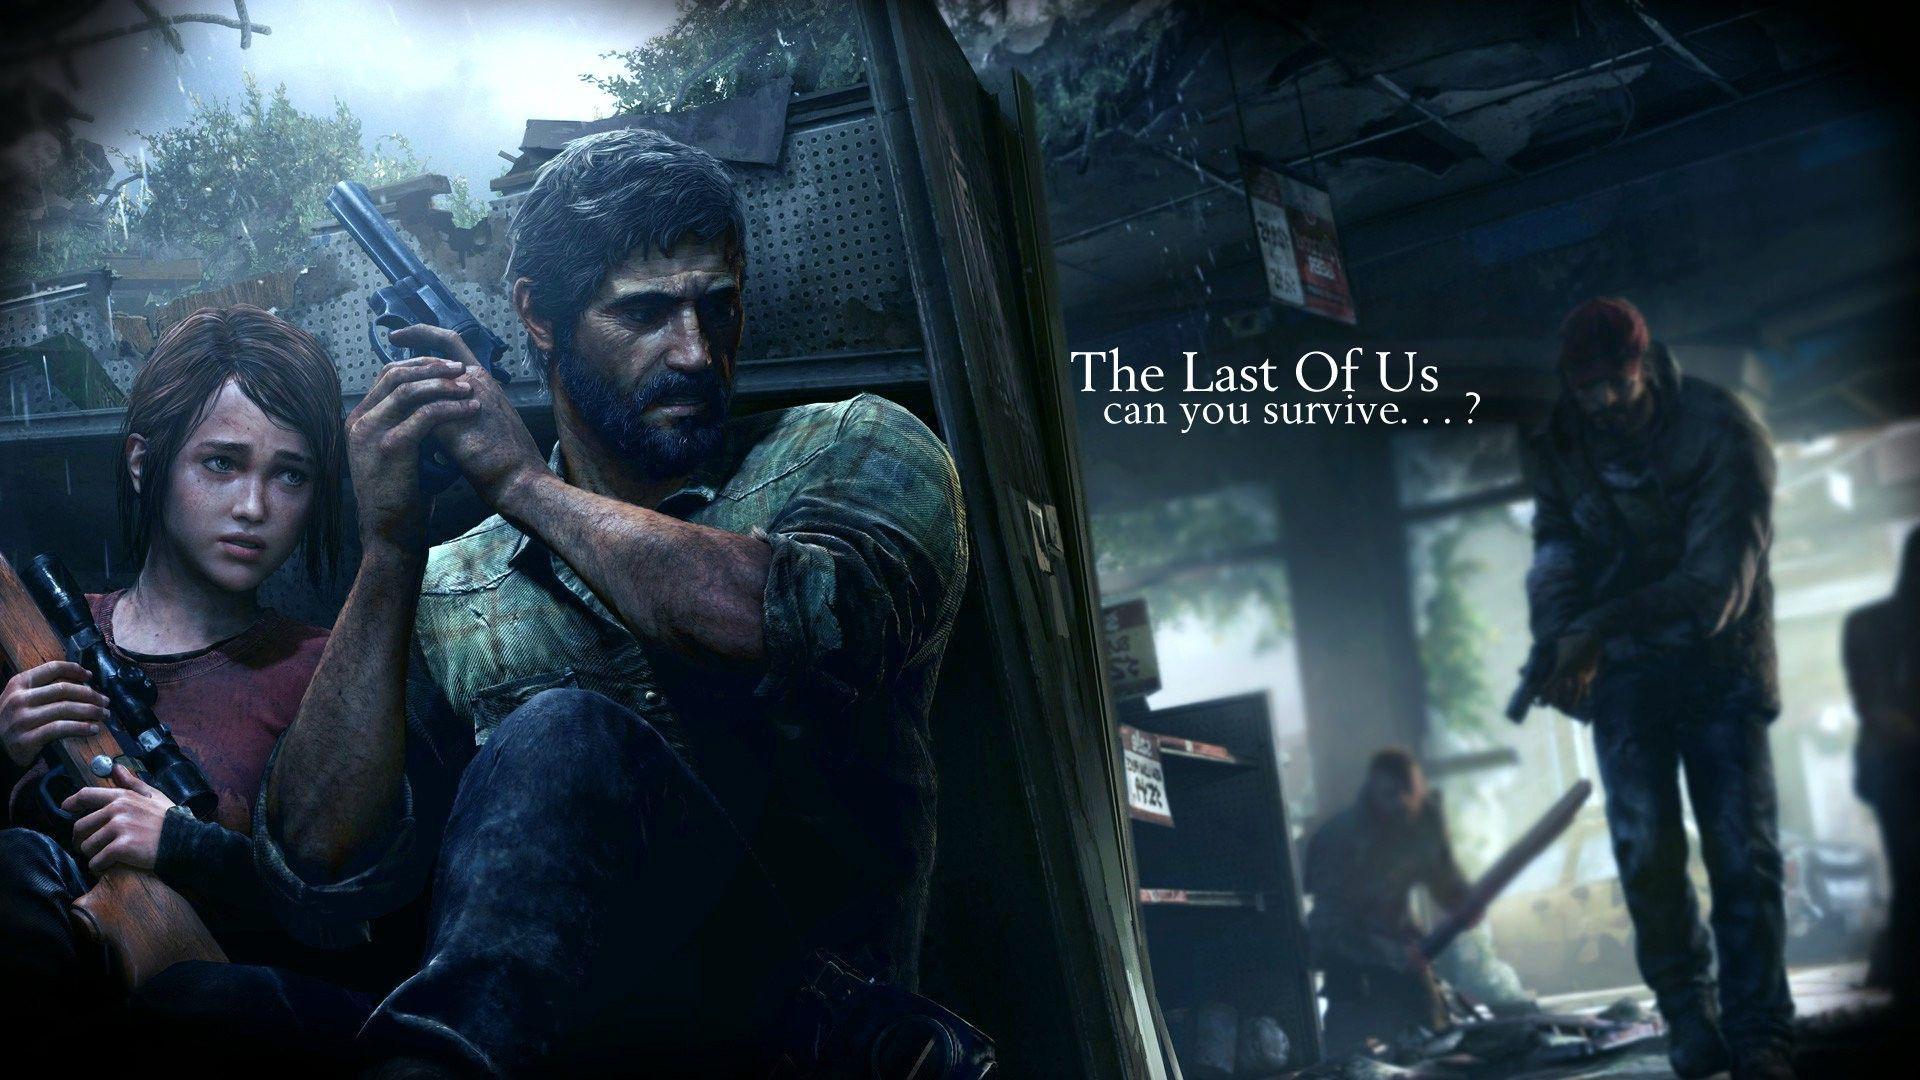 The Last Of Us 2 wallpaper, 1920x1080, 1061513